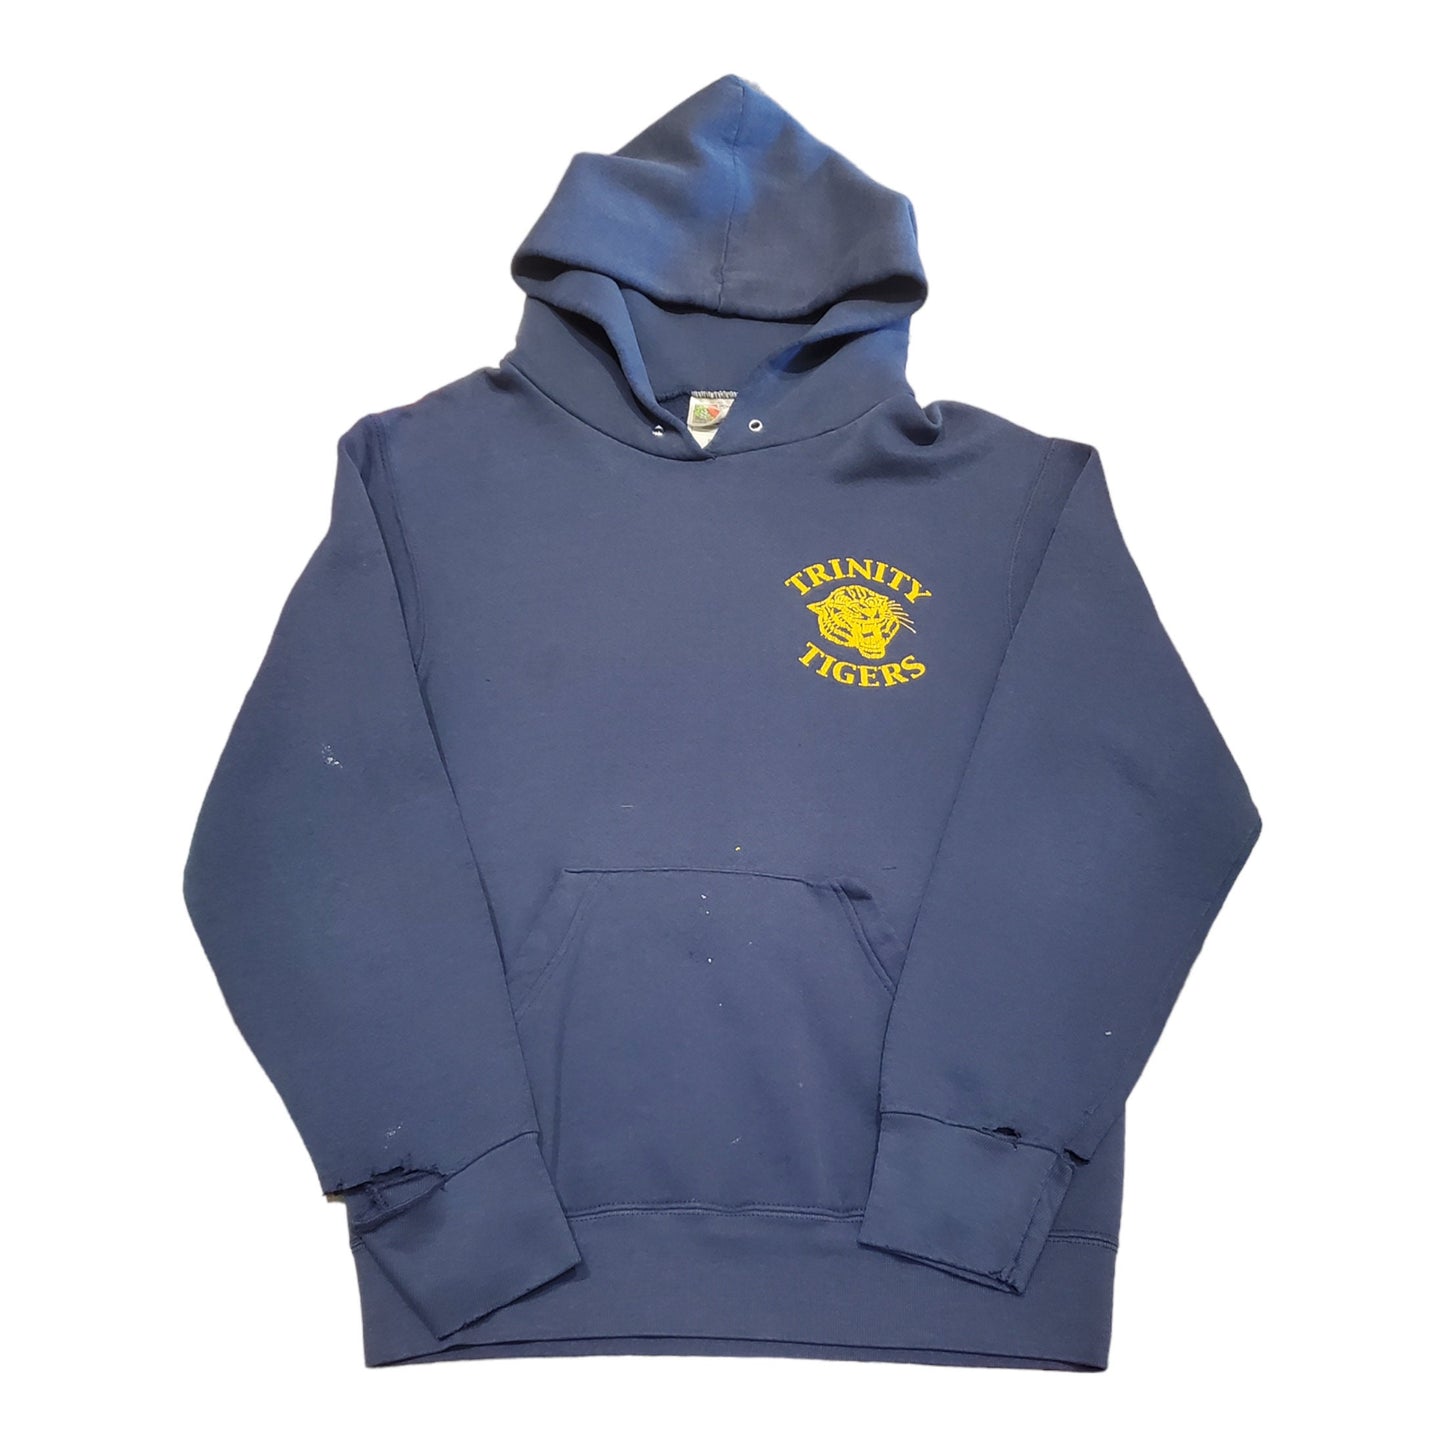 1990s/2000s Distressed Trinity Tigers Hoodie Sweatshirt Size S